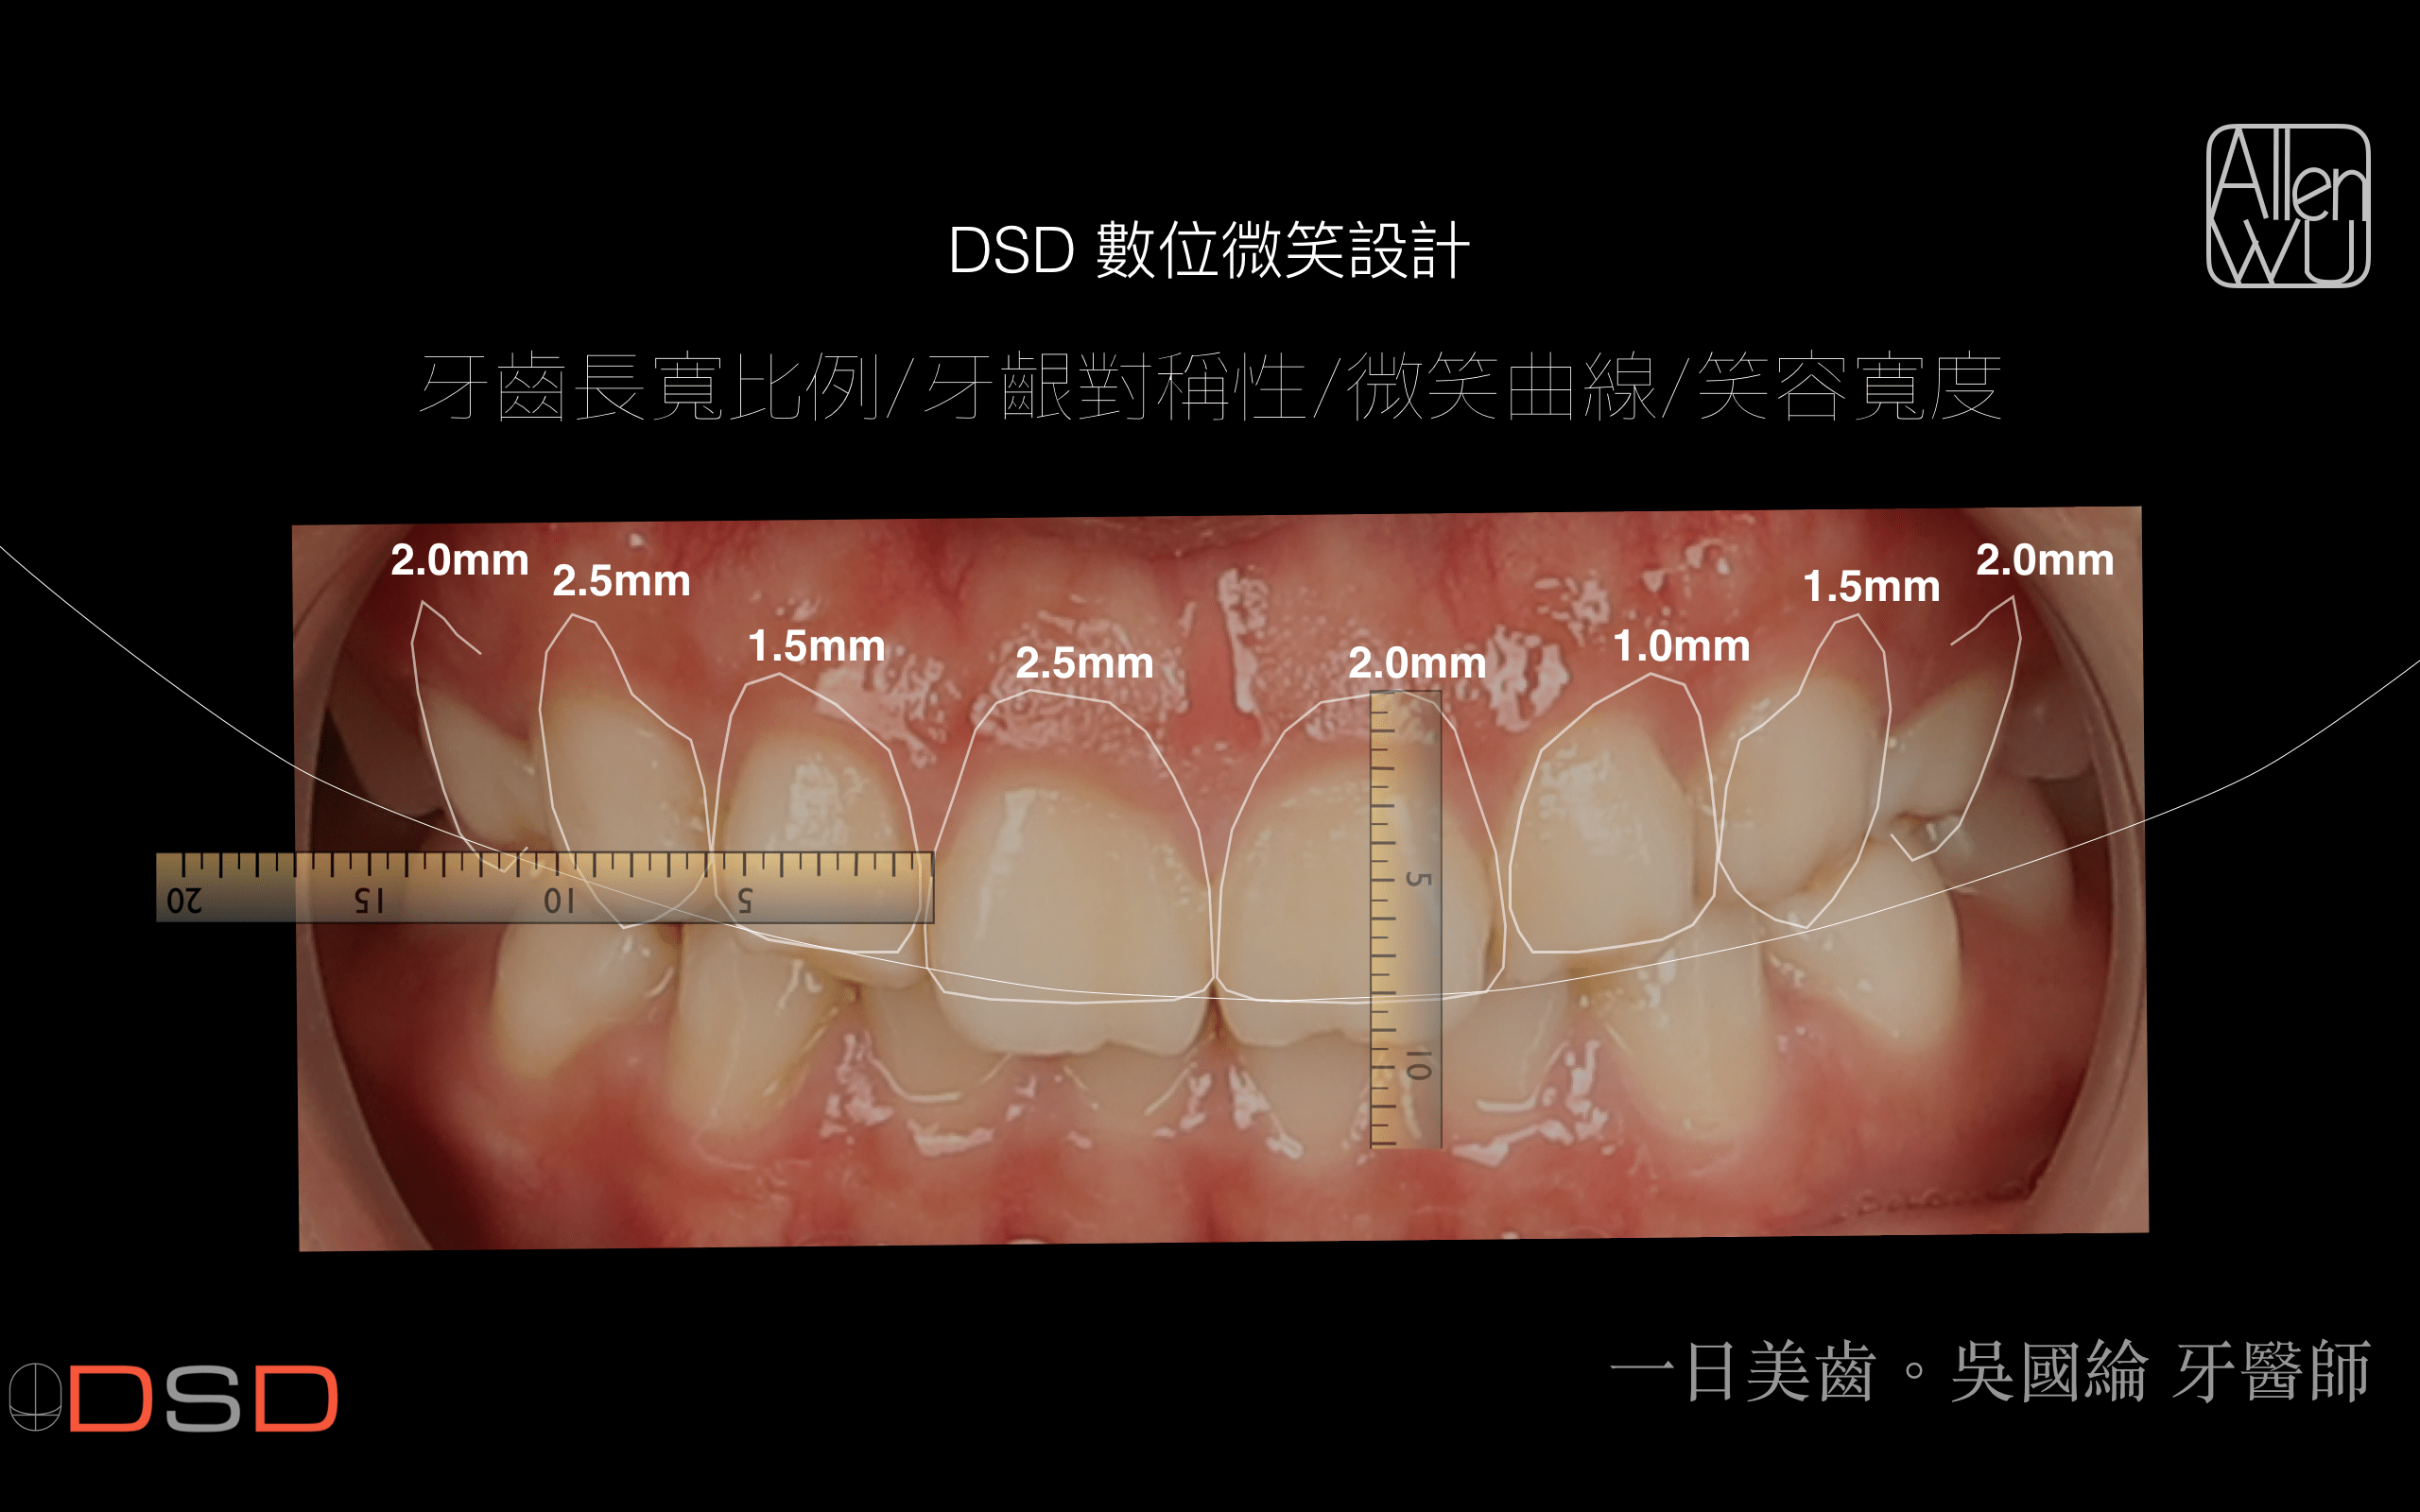 DSD微笑設計-DSD數位微笑設計-牙齒分析圖-吳國綸醫師-台中